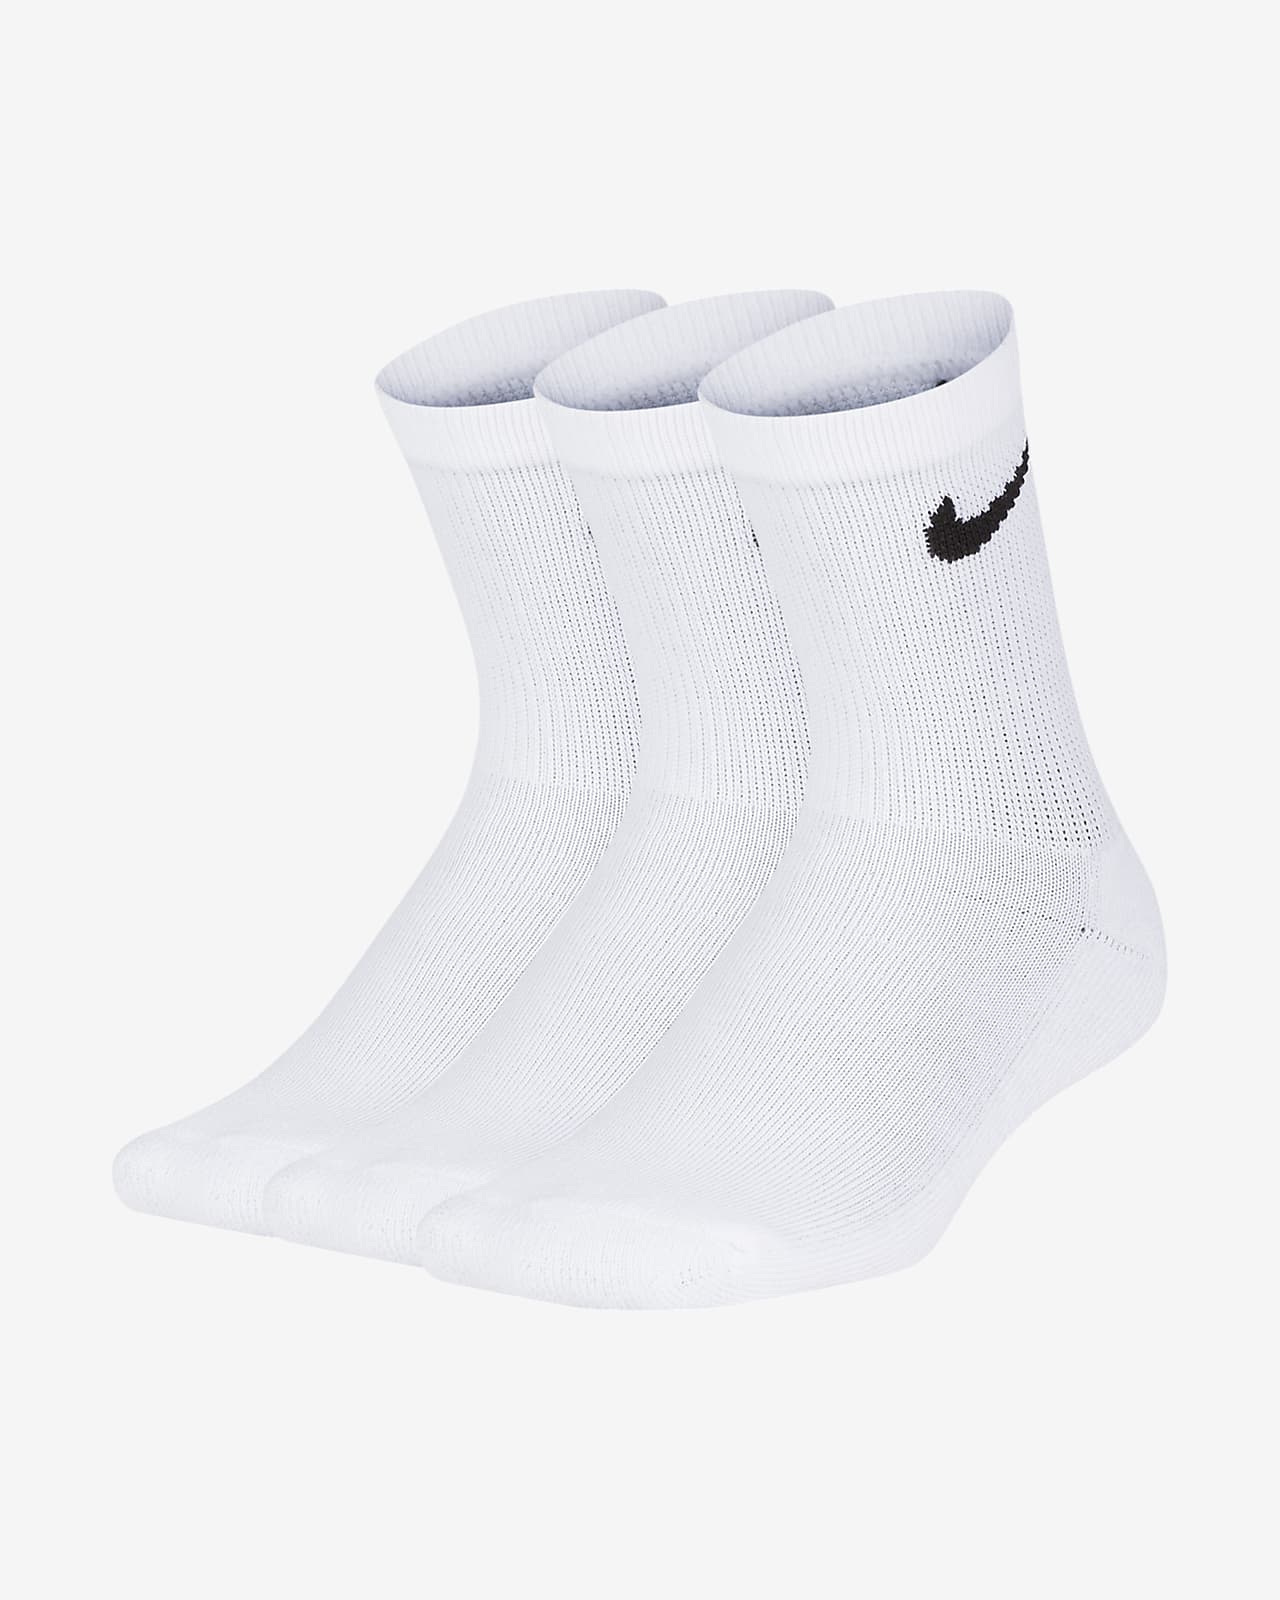 where to get cheap nike socks